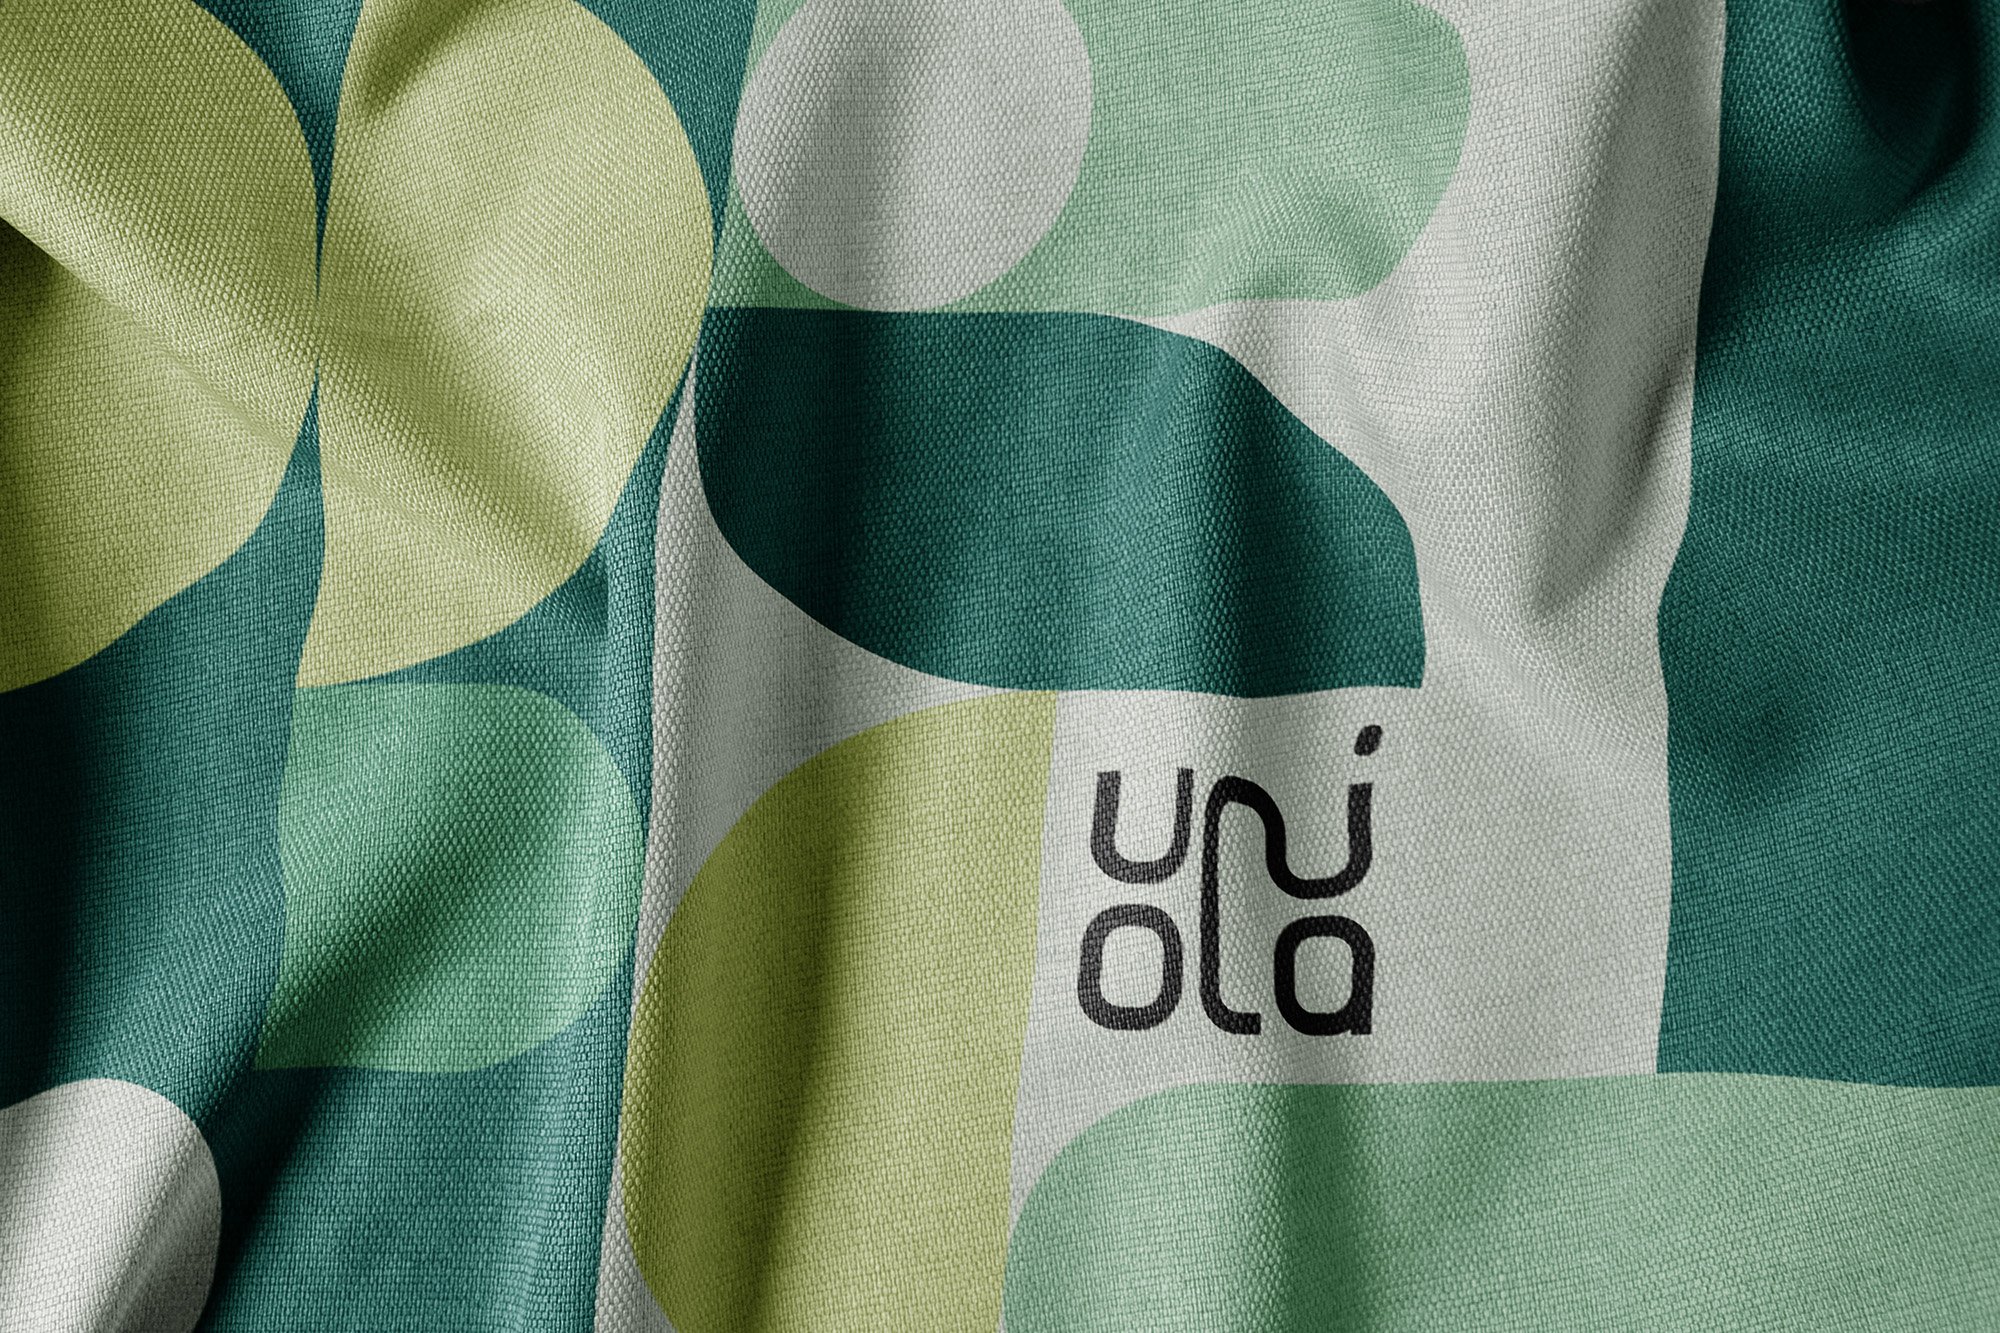 Uniola fabric pattern